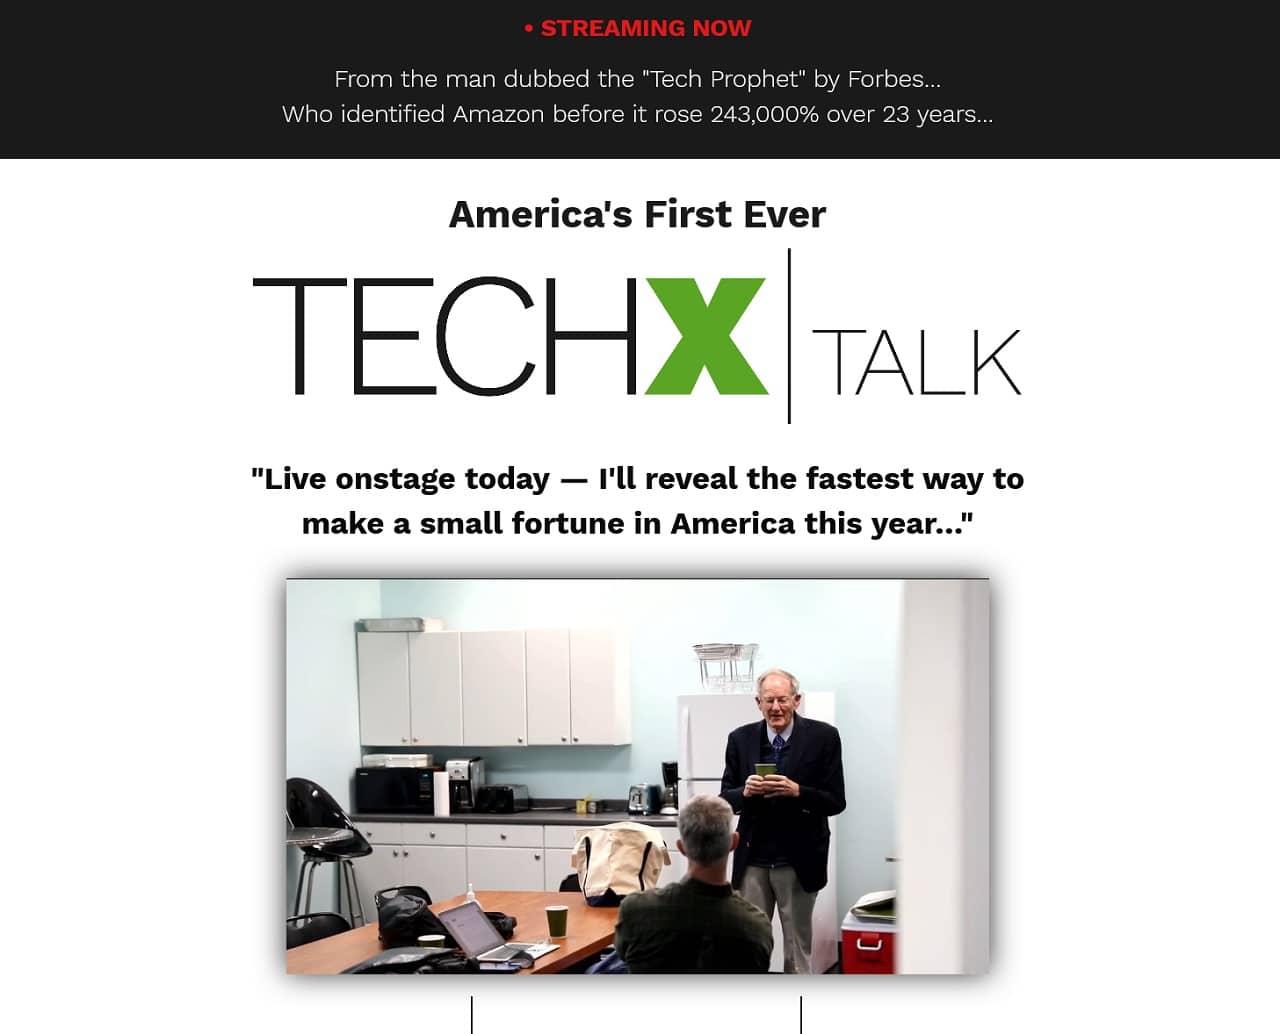 George Gilder’s “TechX Talk”